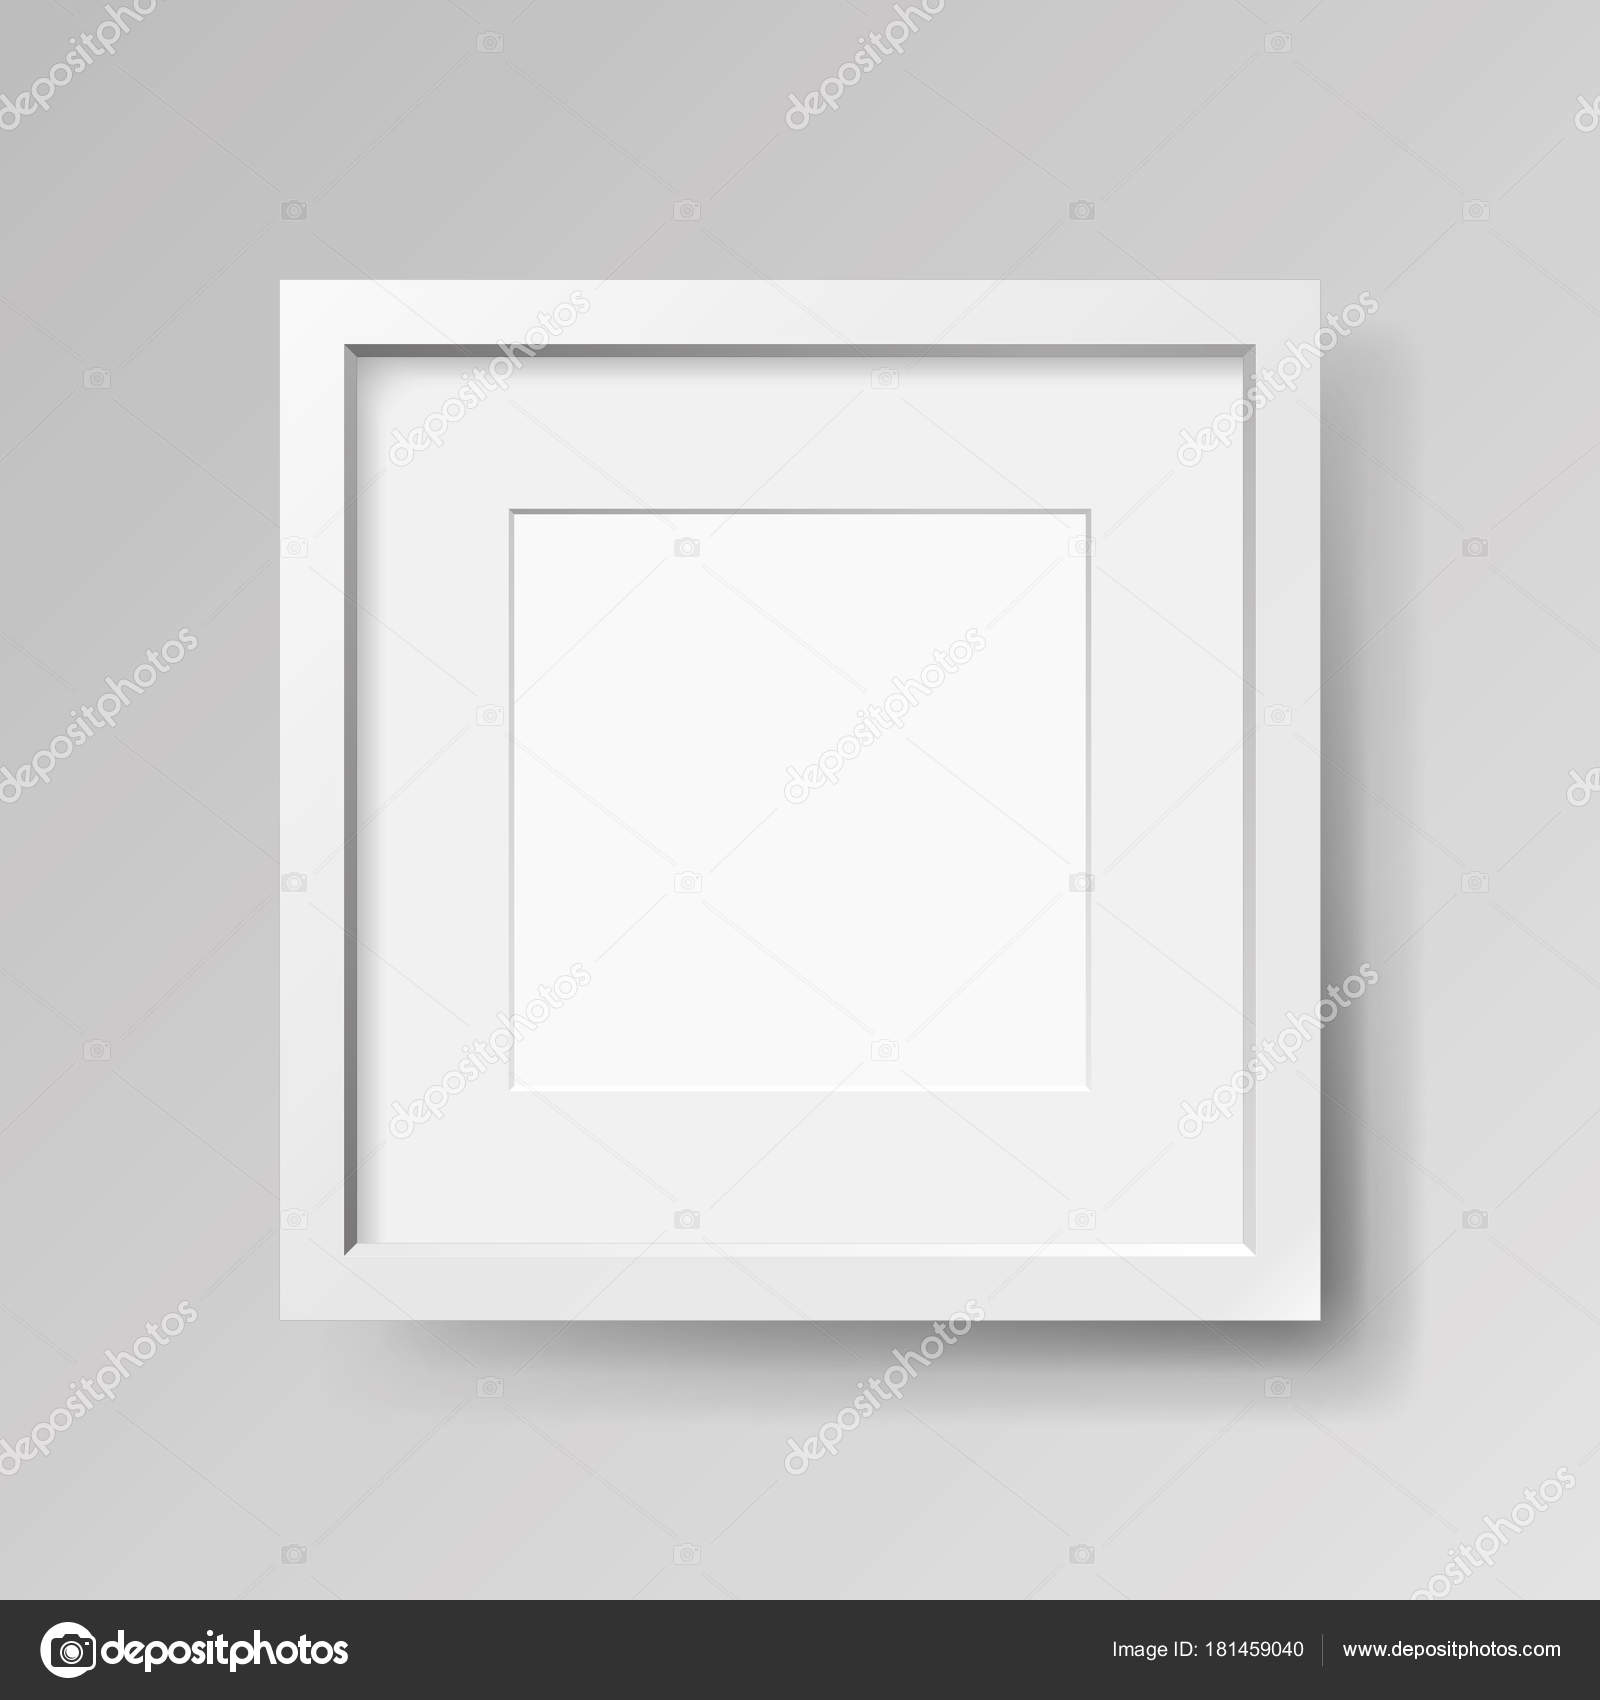 https://st3.depositphotos.com/2114317/18145/v/1600/depositphotos_181459040-stock-illustration-realistic-empty-white-frame-passepartout.jpg